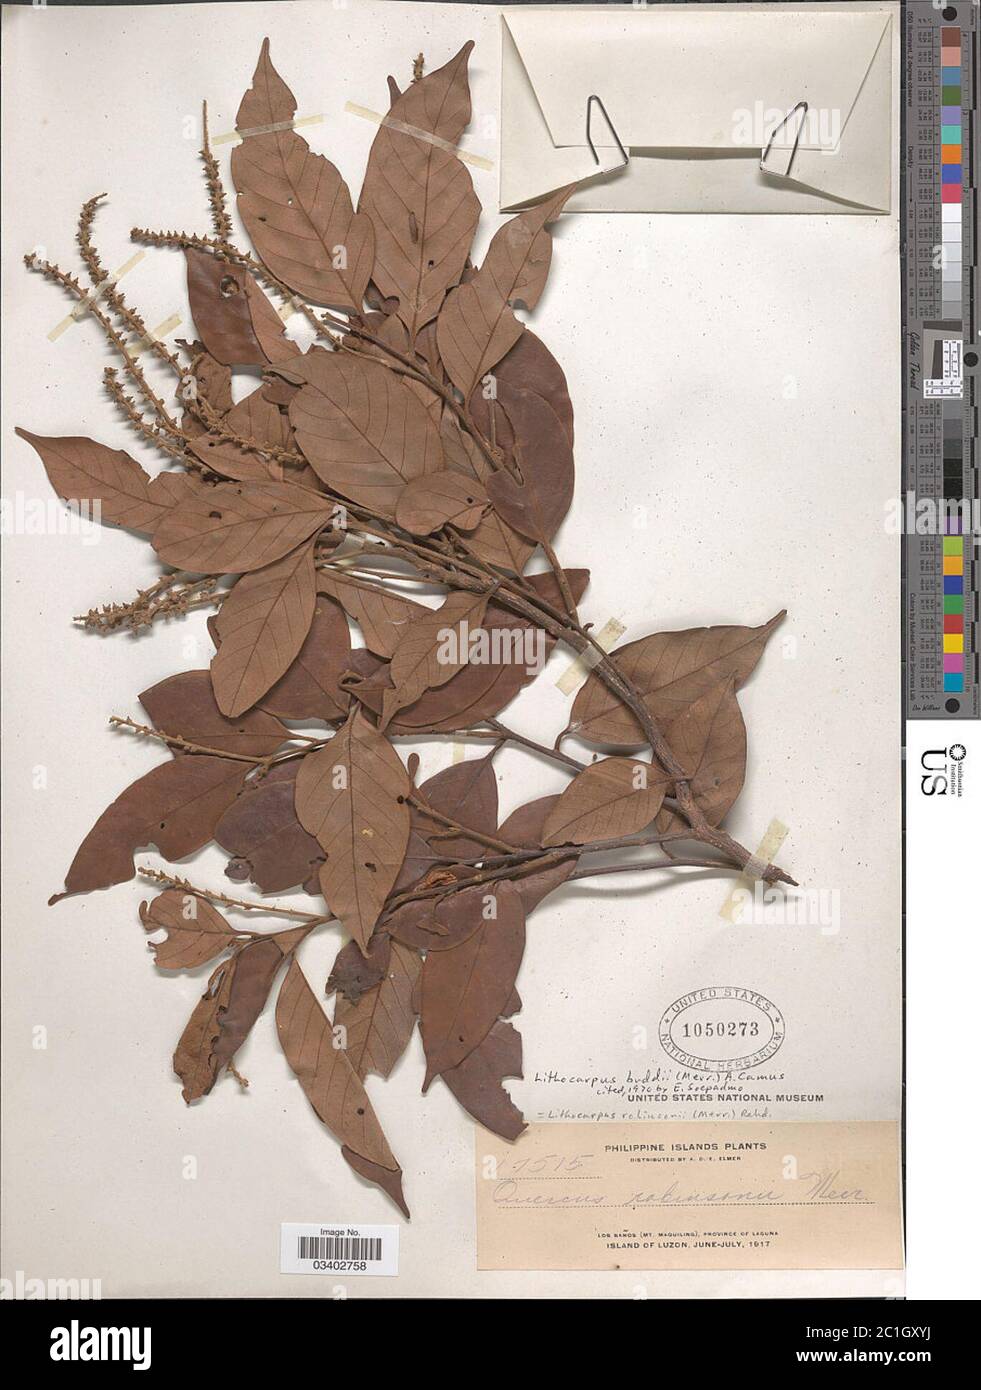 Lithocarpus robinsonii Koidz Rehder Lithocarpus robinsonii Koidz Rehder. Stock Photo